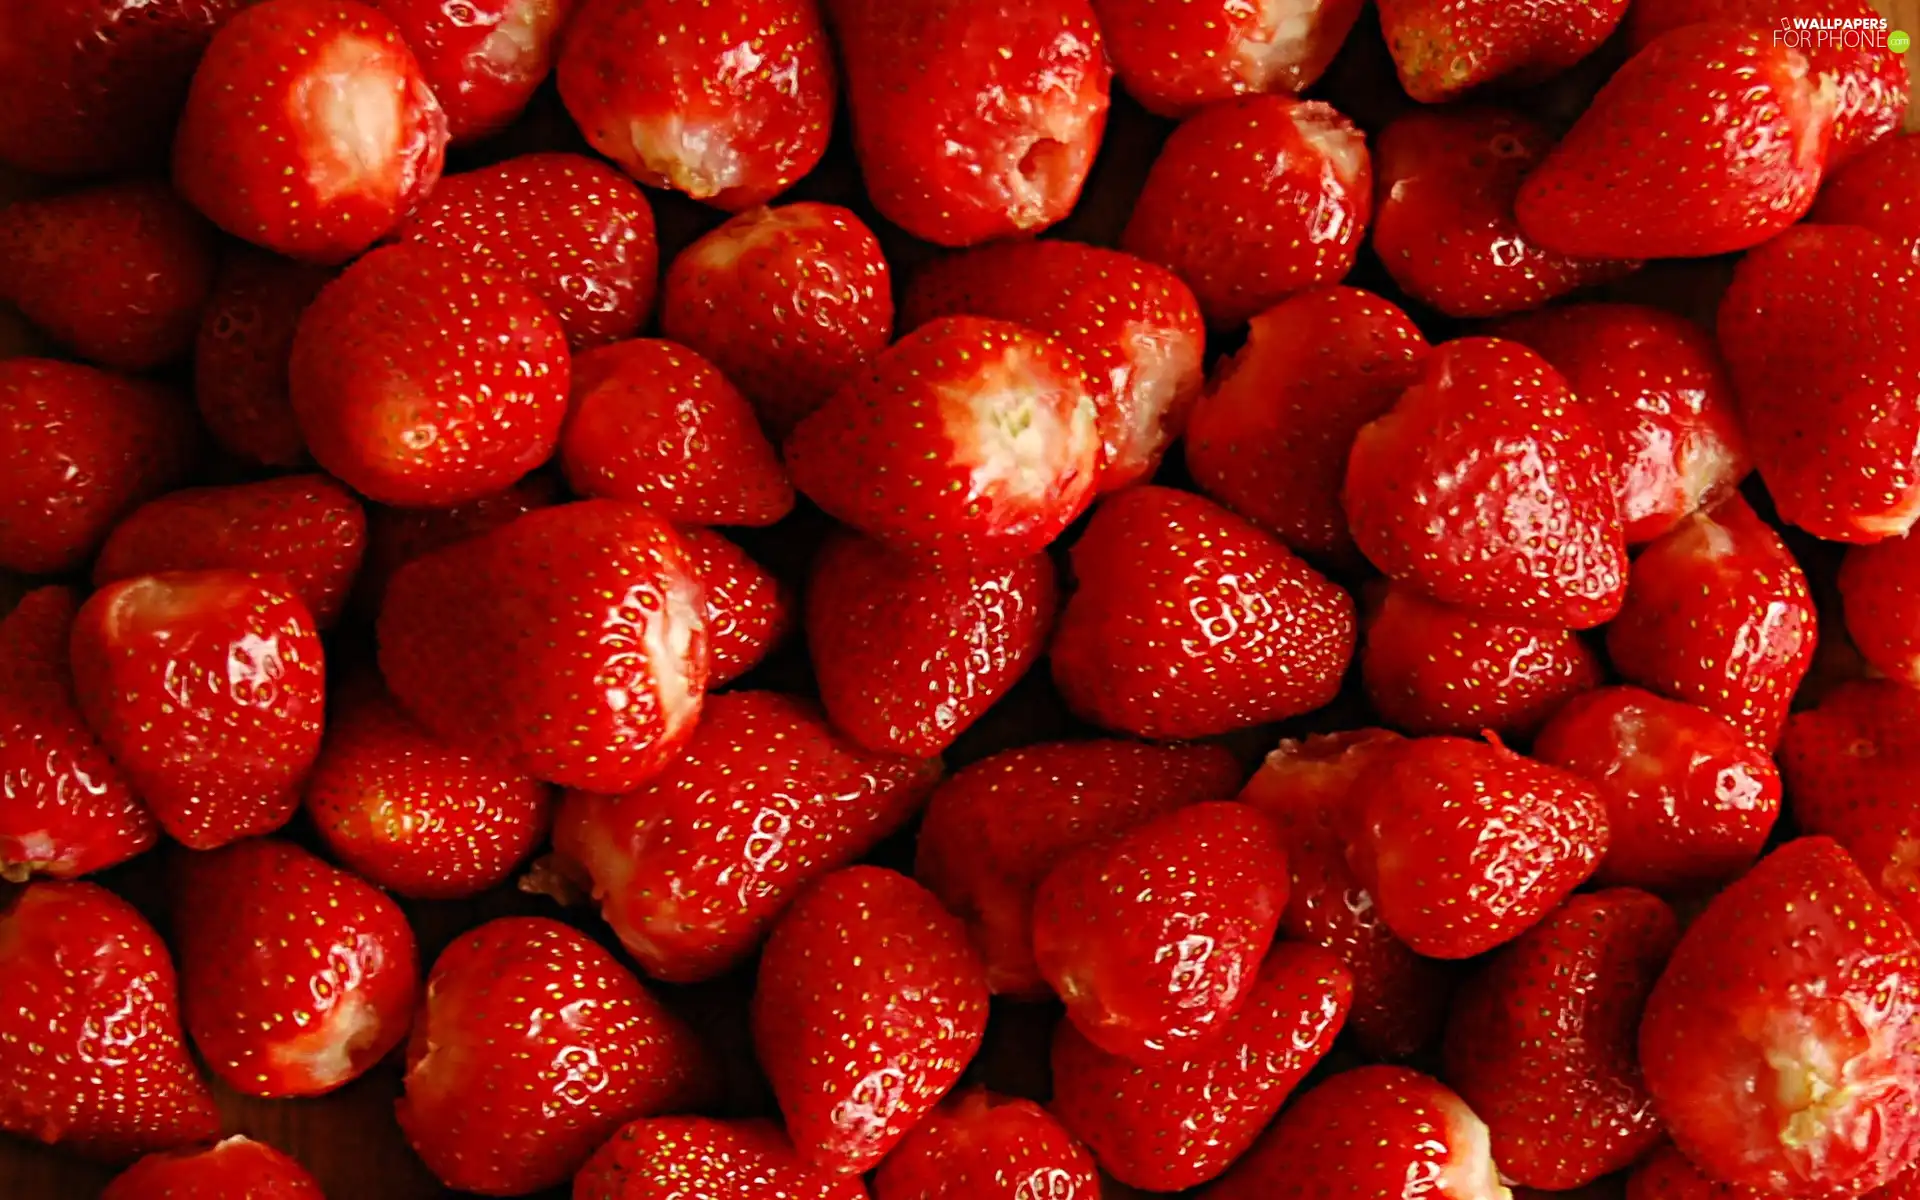 Red, strawberries